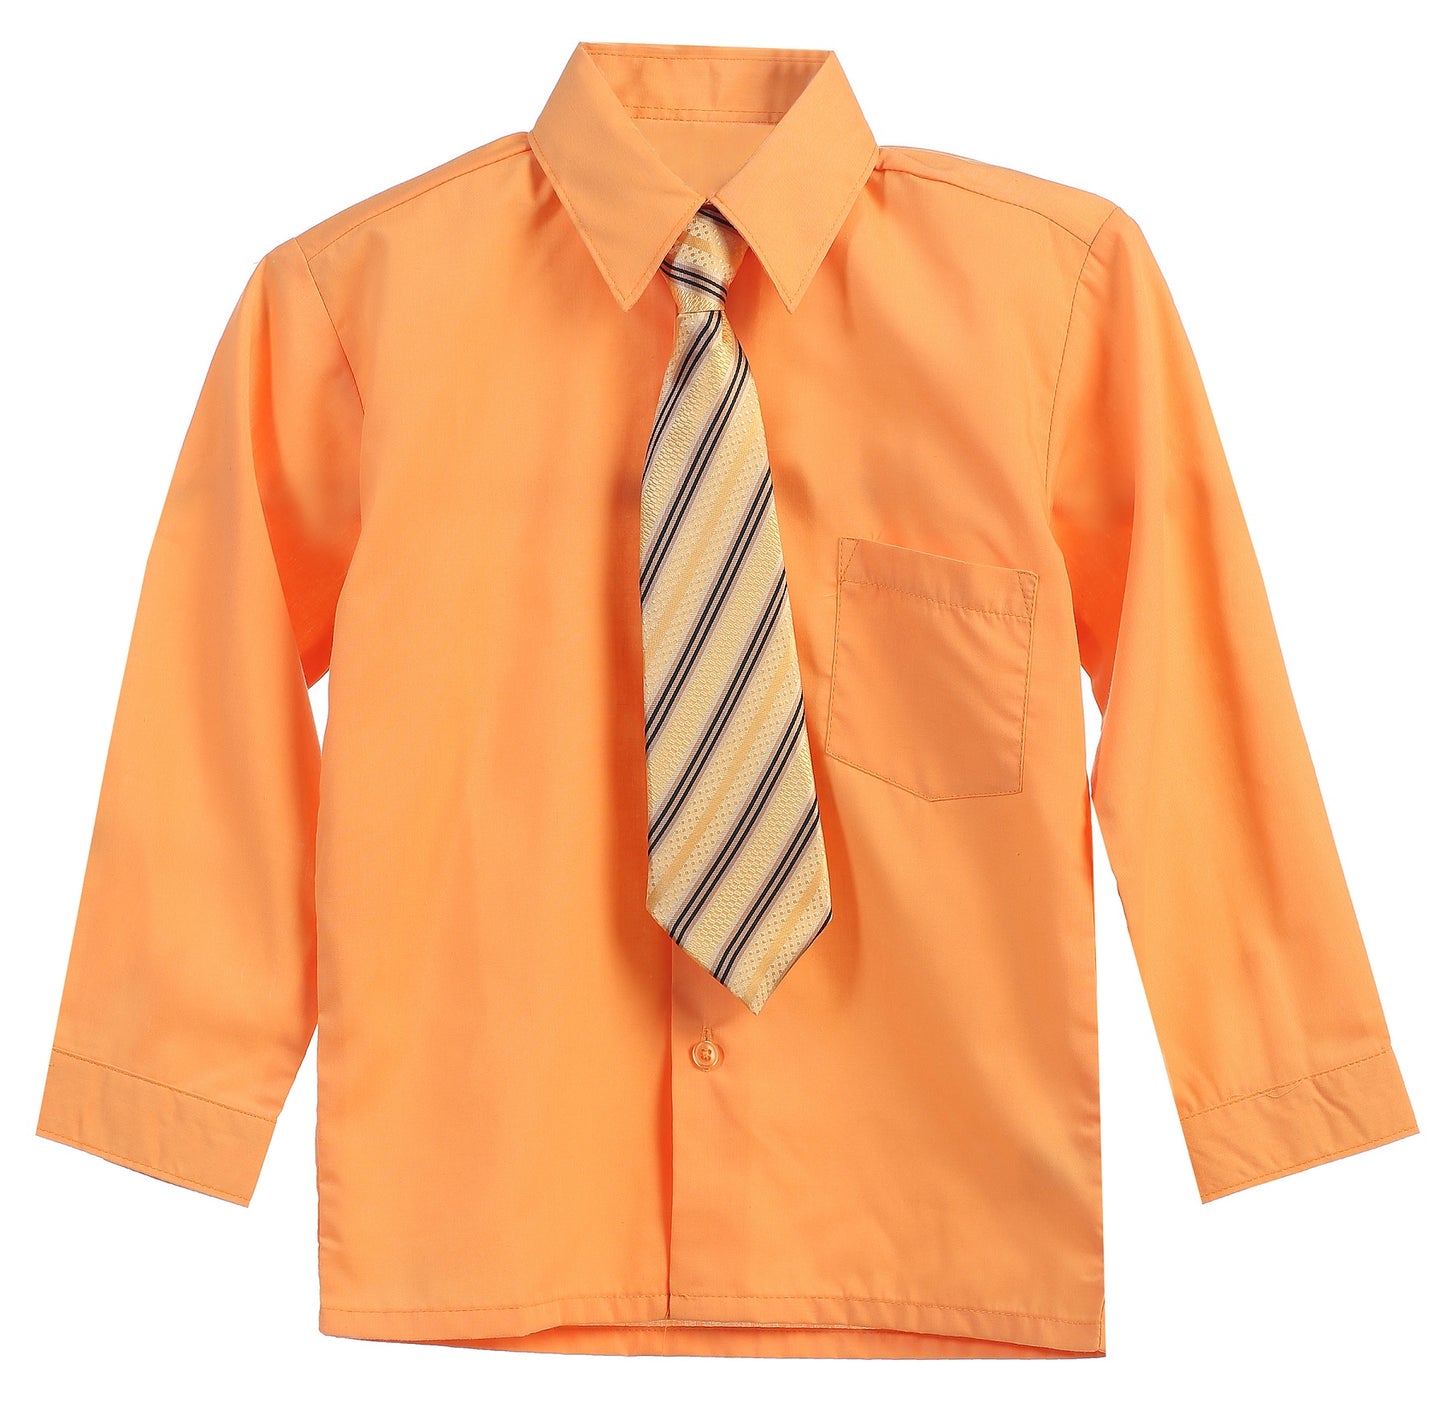 Boys Solid Long Sleeve Dress Shirt With Tie - Pumpkin